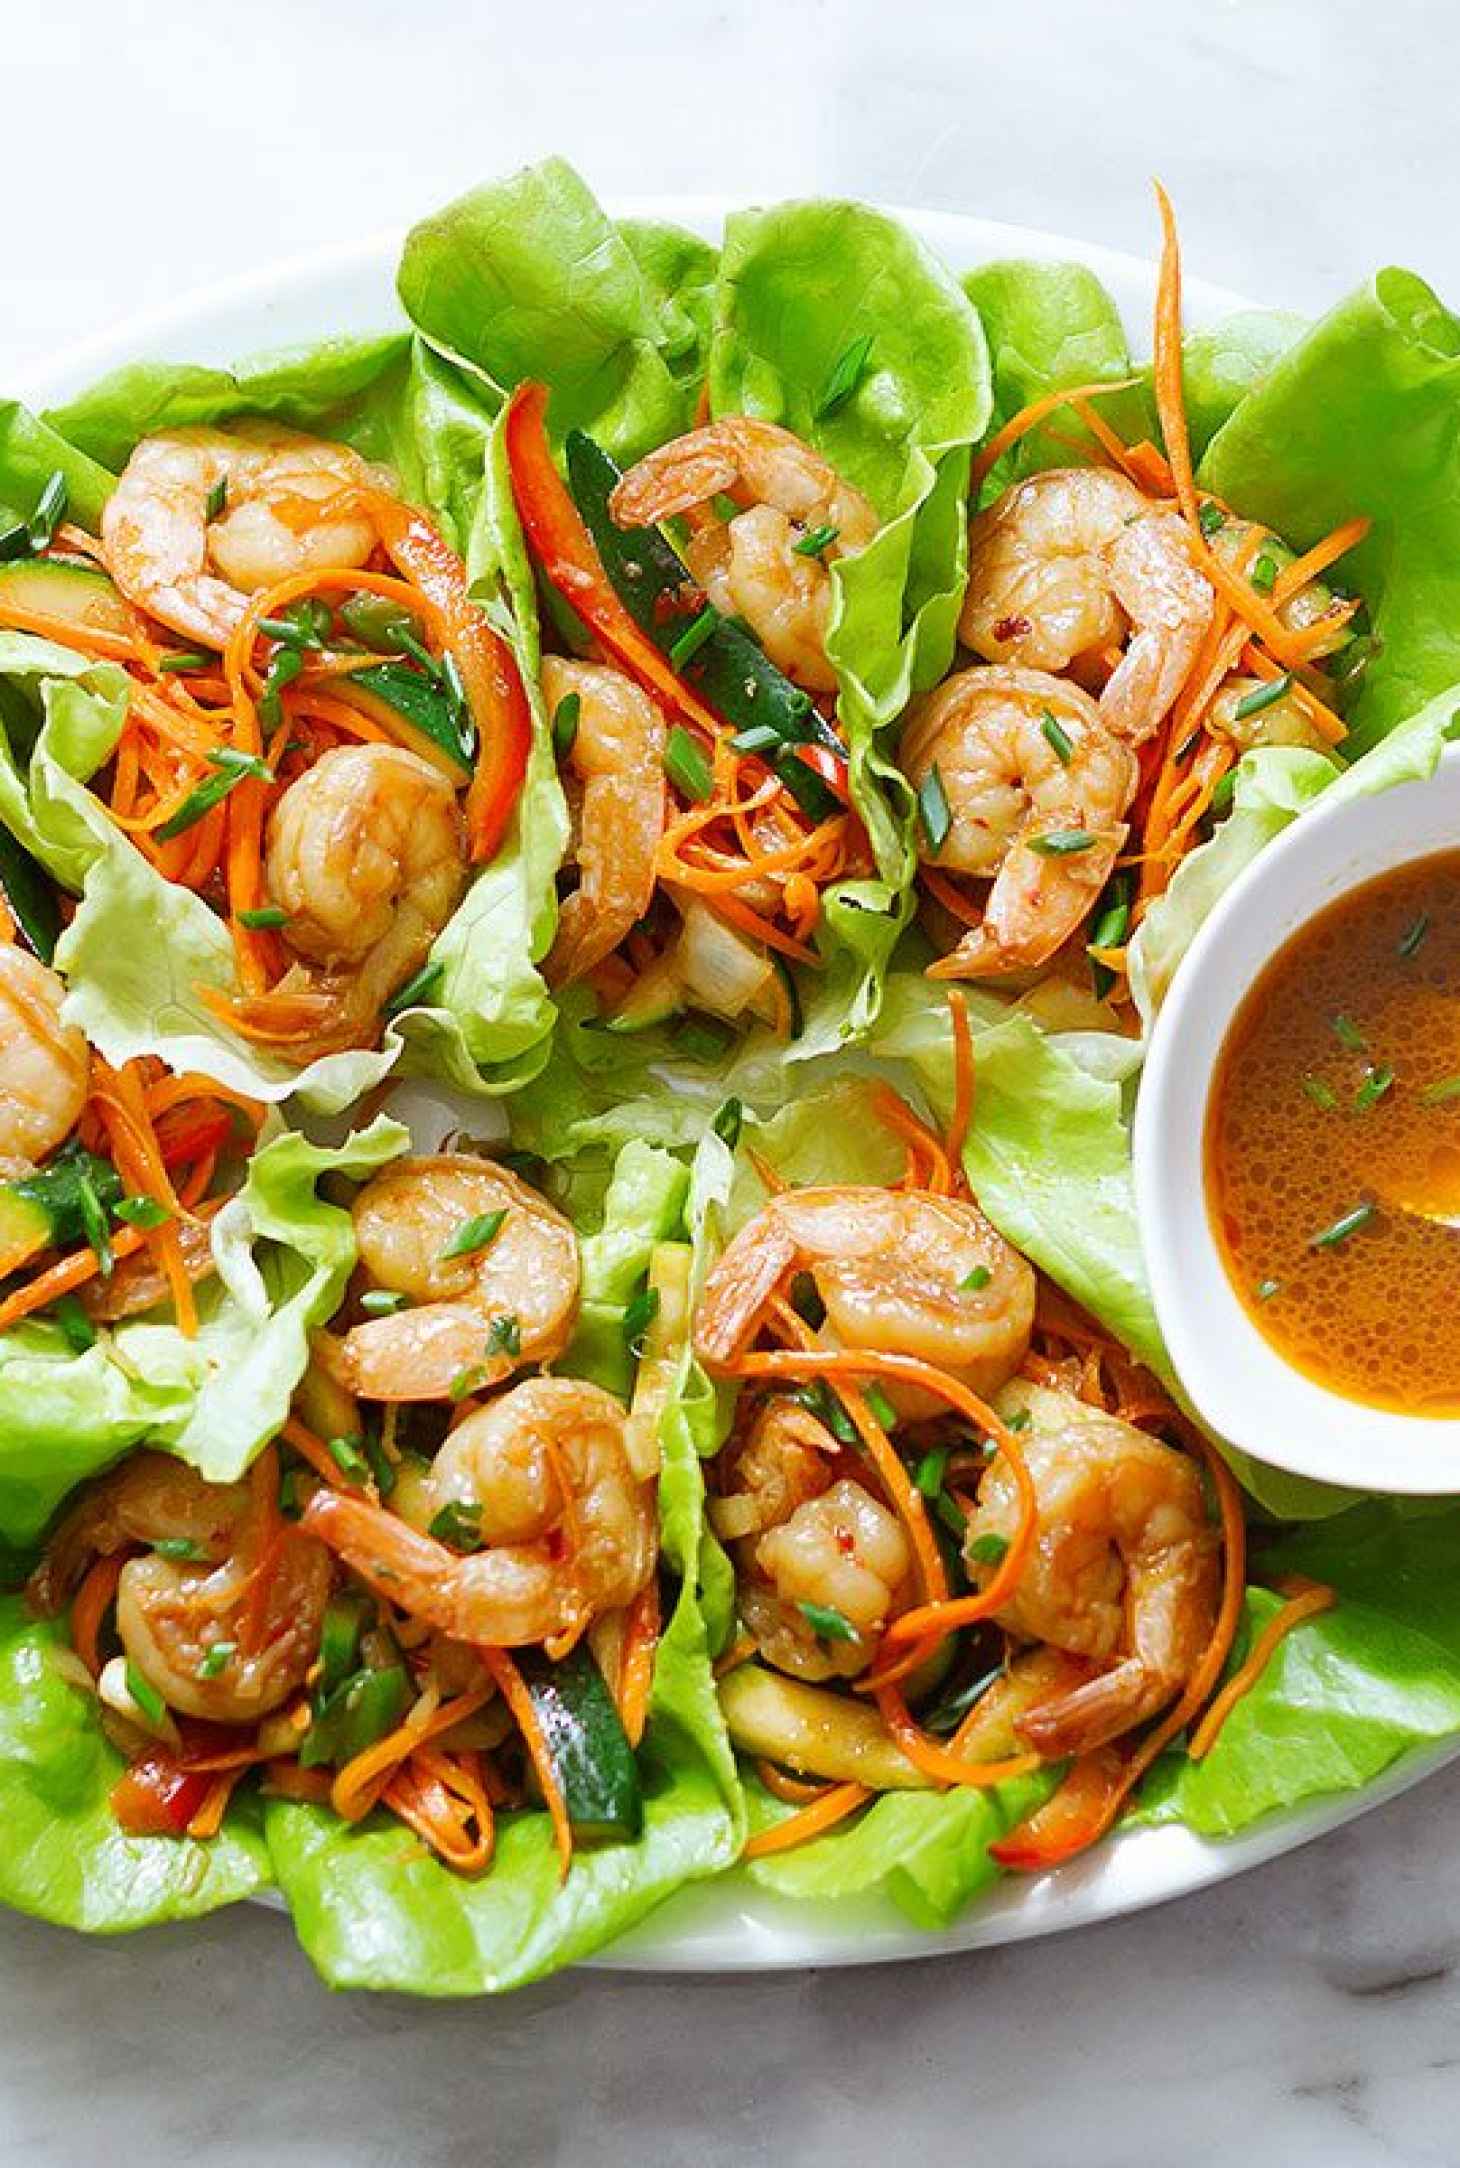 Shrimp Lettuce Wraps - #recipe by #eatwell101 - https://www.eatwell101.com/shrimp-lettuce-wraps